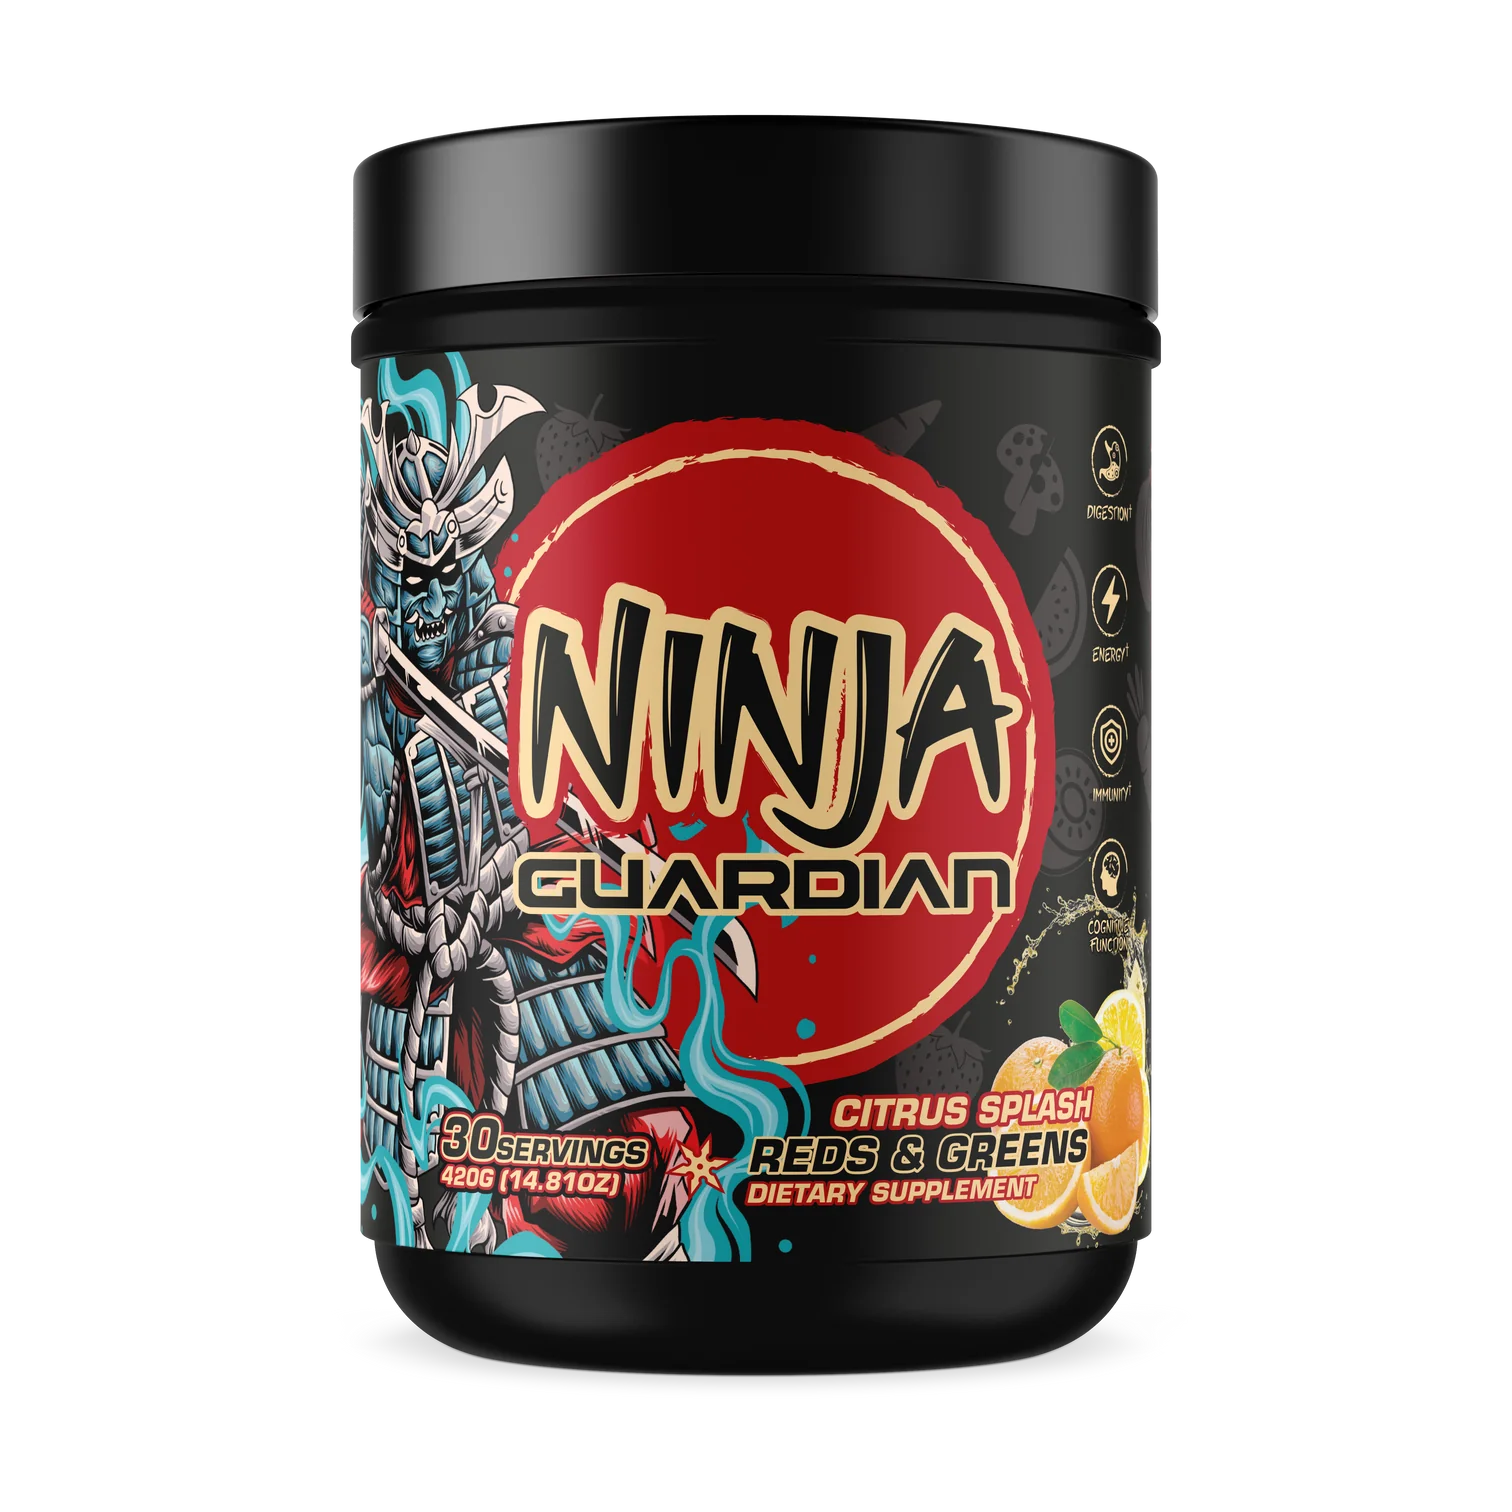 Ninja Guardian Greens and Reds (Citrus Splash)